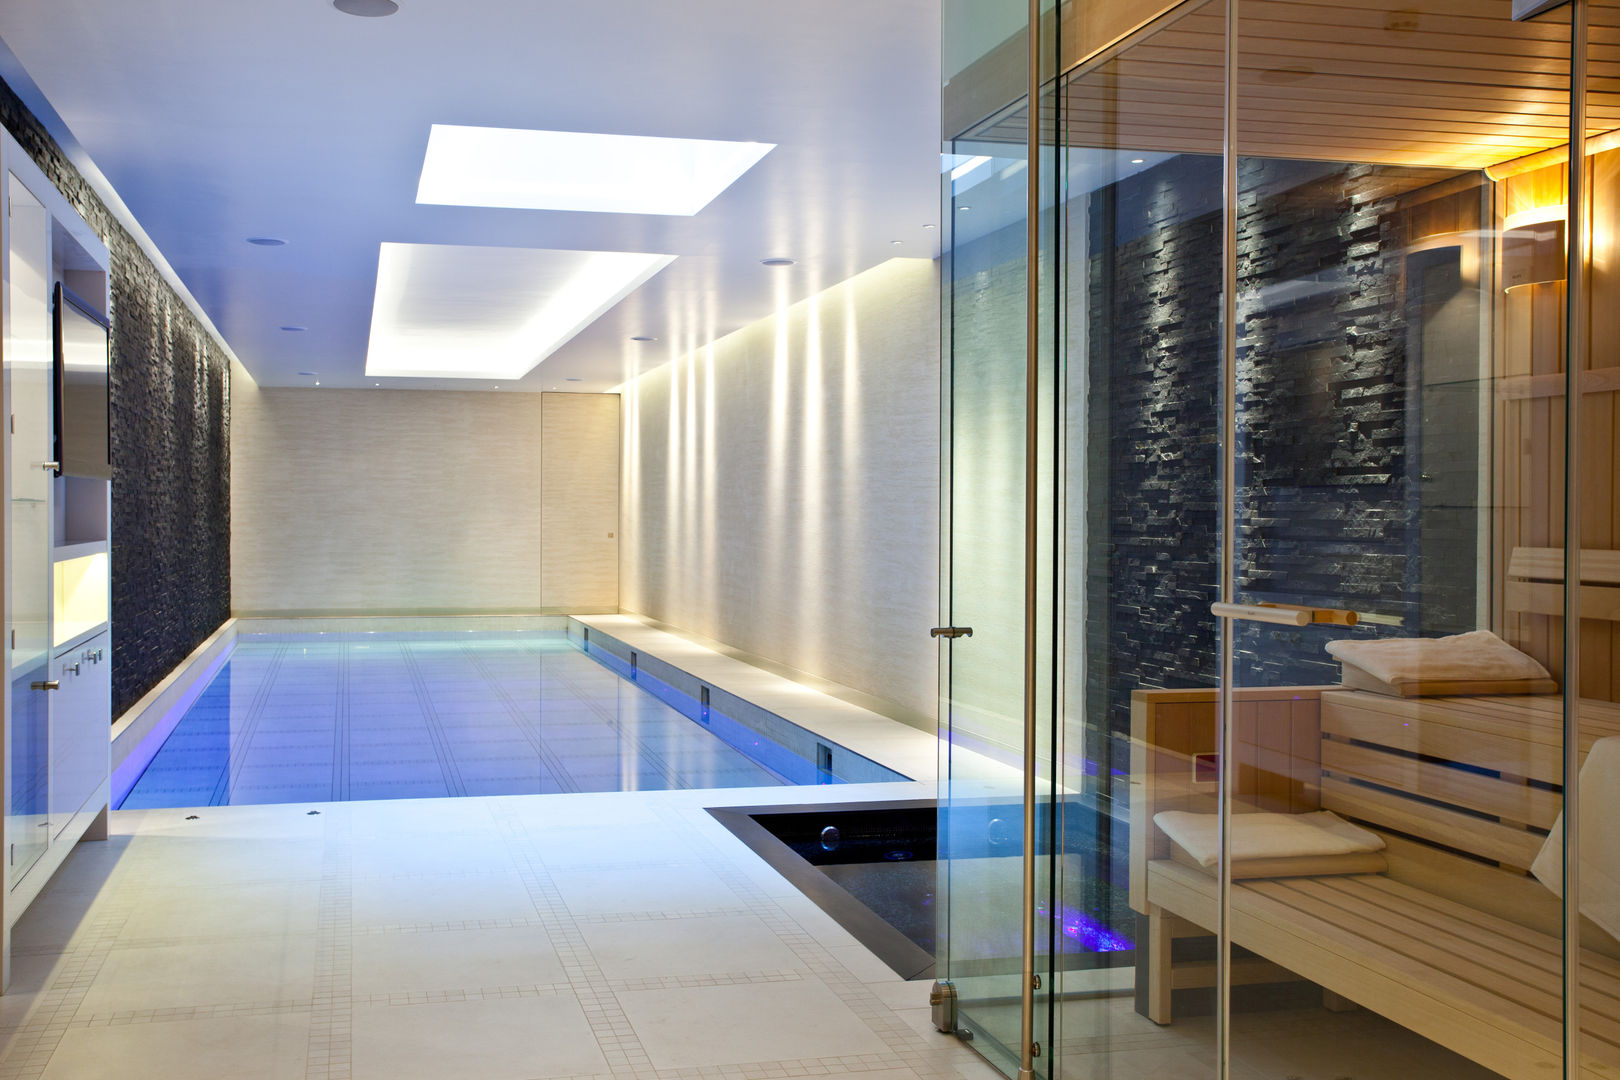 Moving Floor Pool, London Swimming Pool Company London Swimming Pool Company Piscinas de estilo moderno